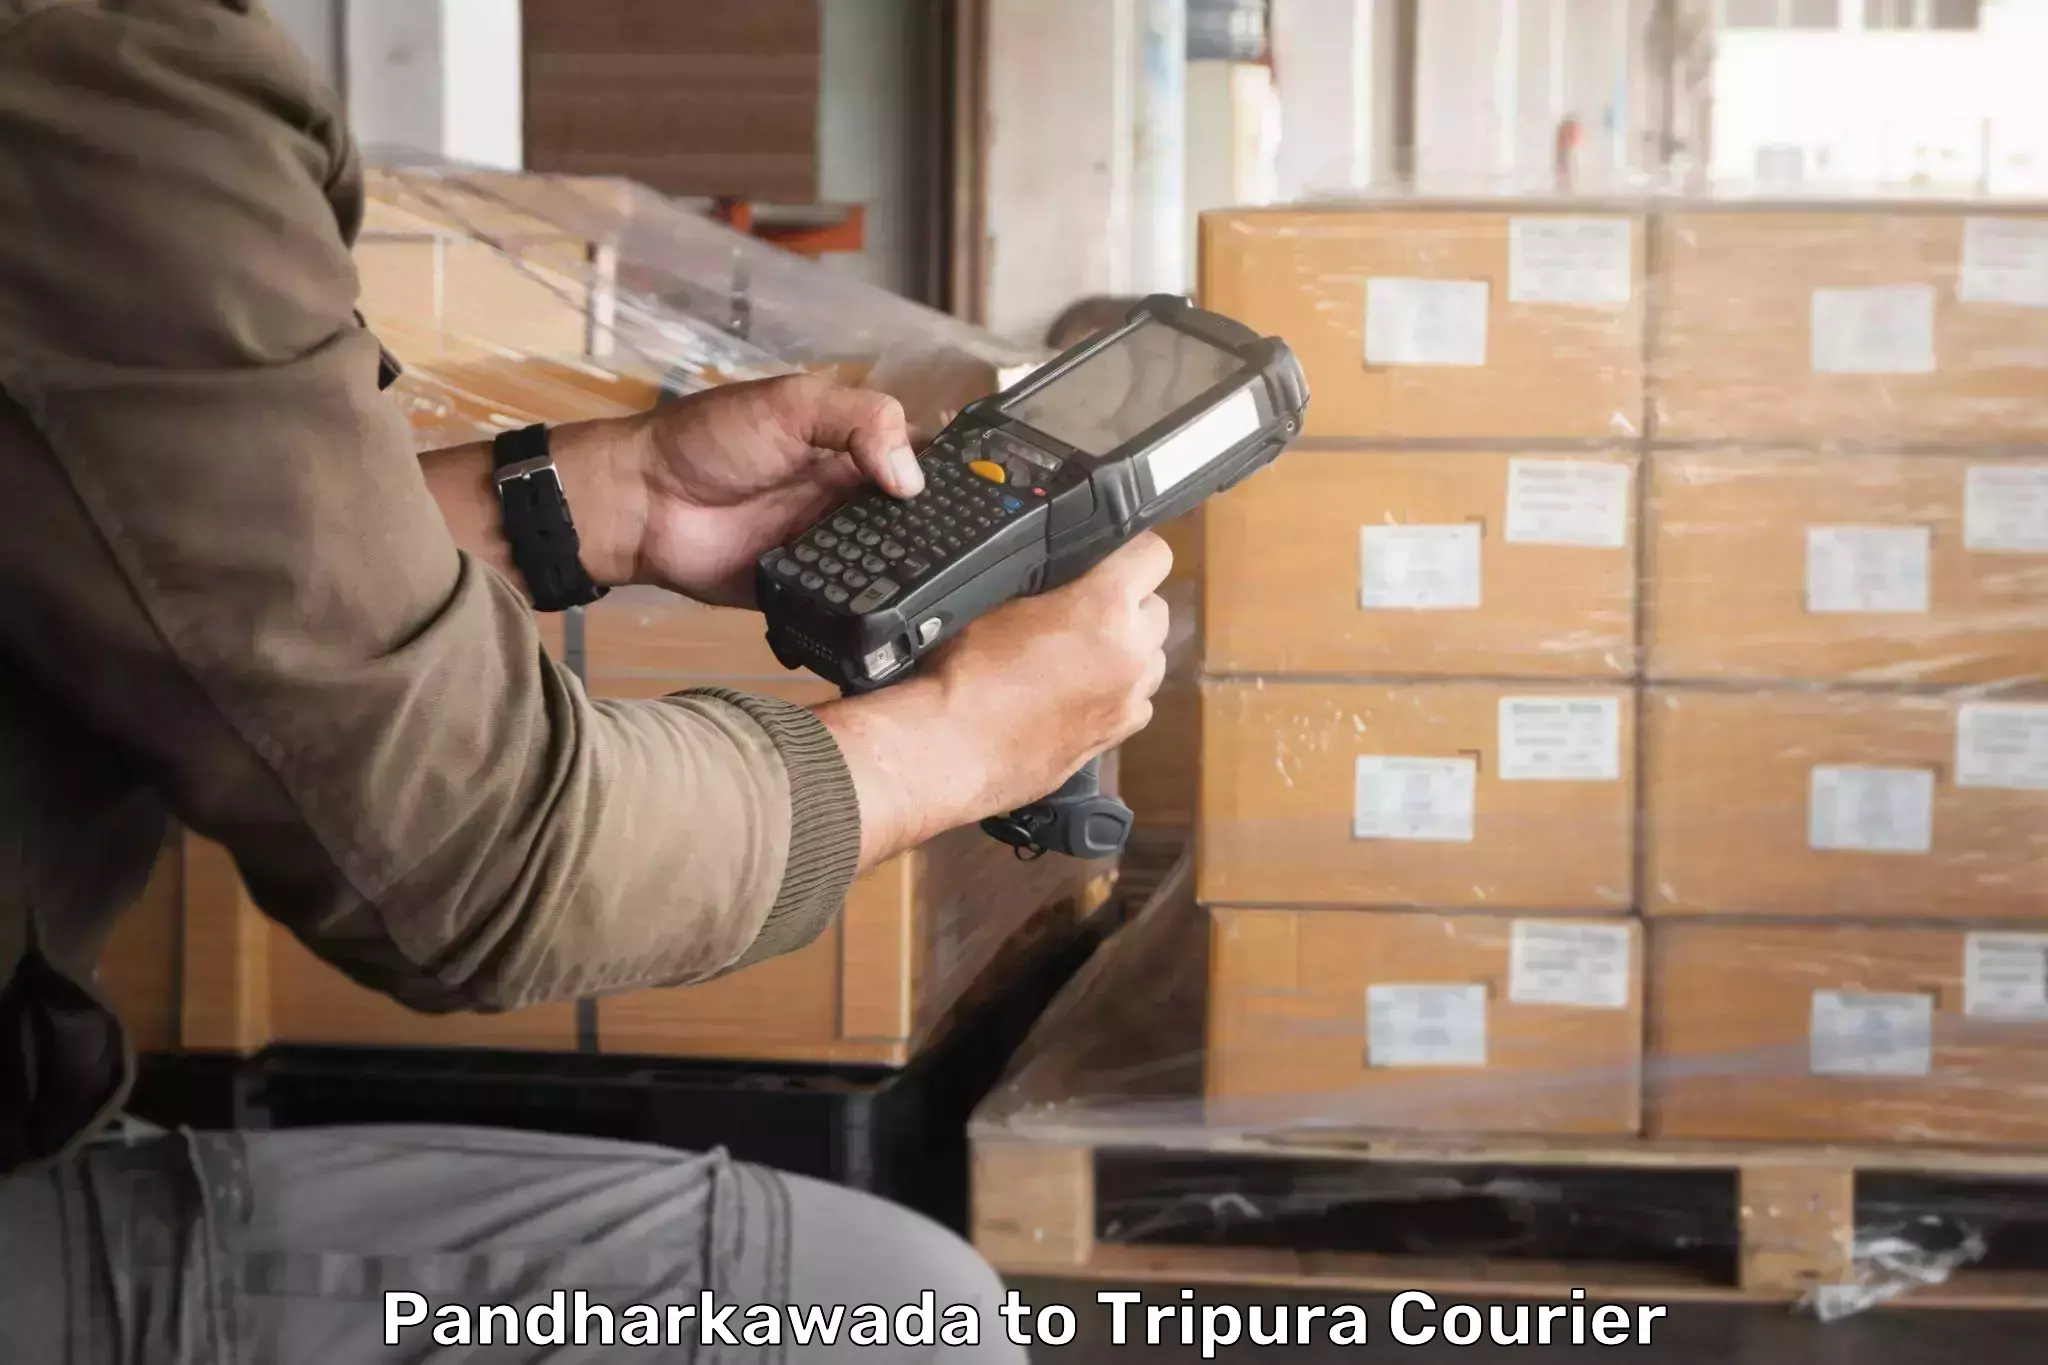 Express delivery capabilities Pandharkawada to Tripura